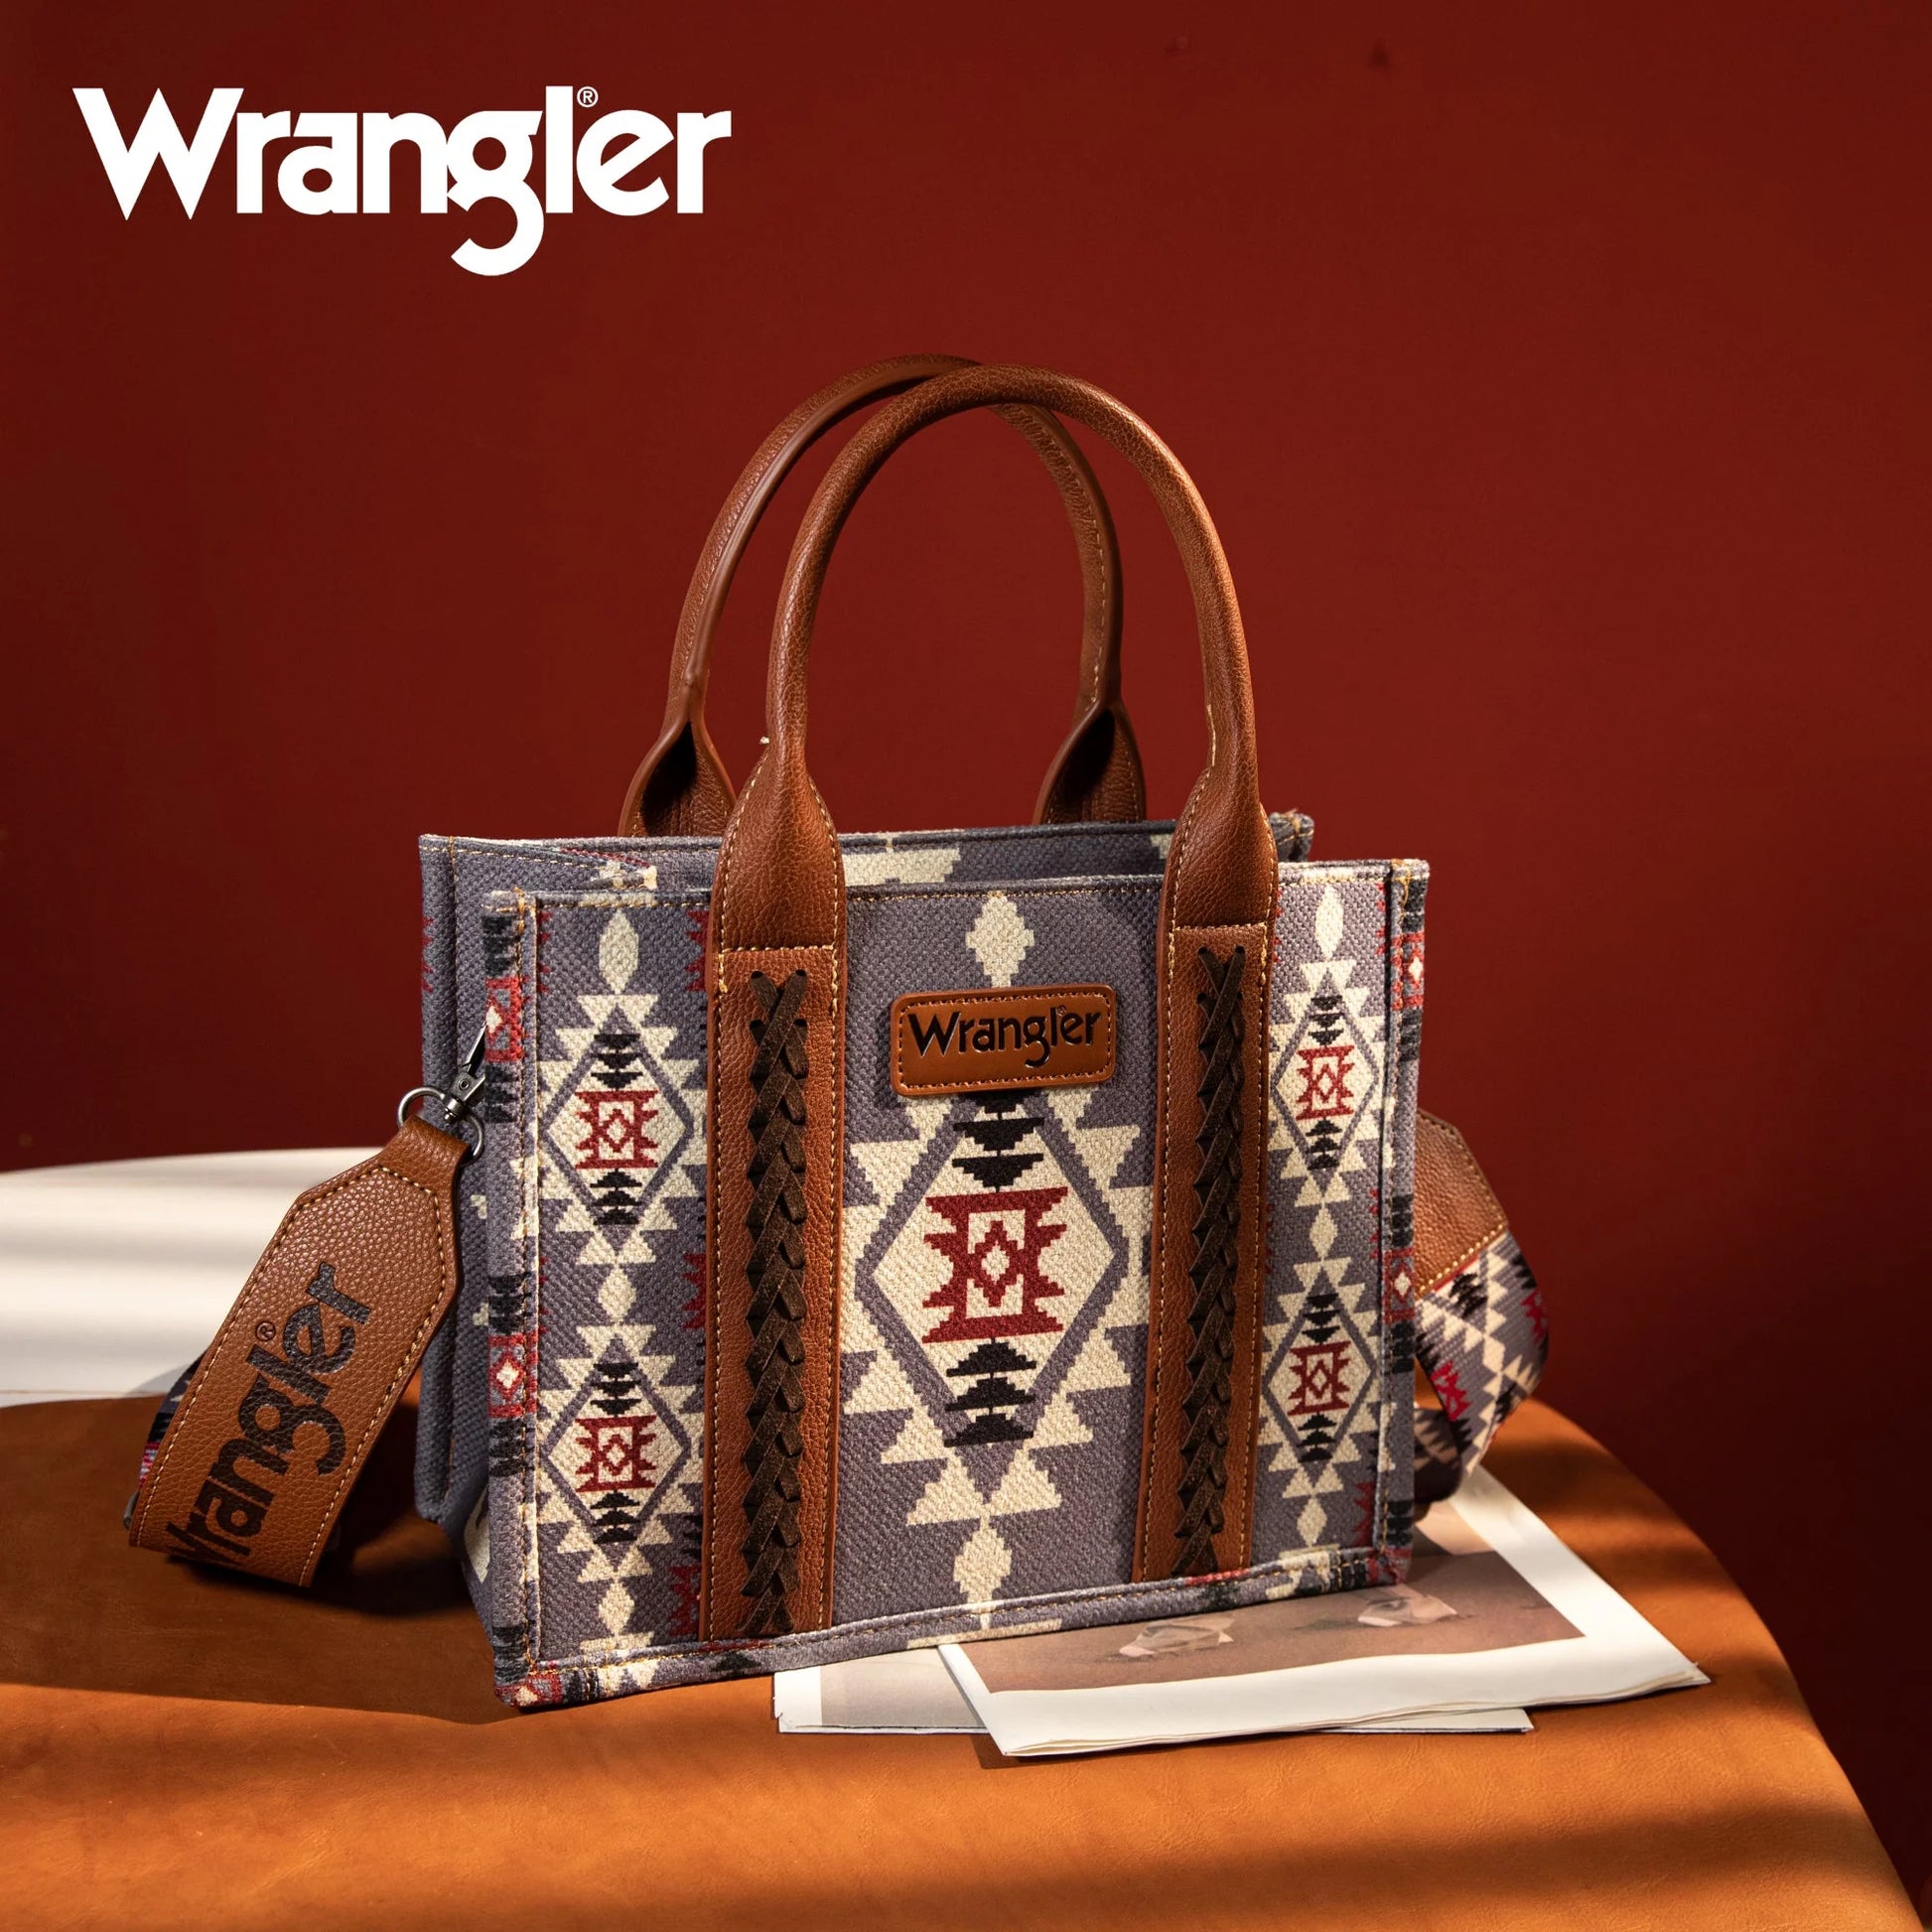 The fall wrangler tote in coffee #wranglerpurse #fallfashioninspo #tik, wrangler purse